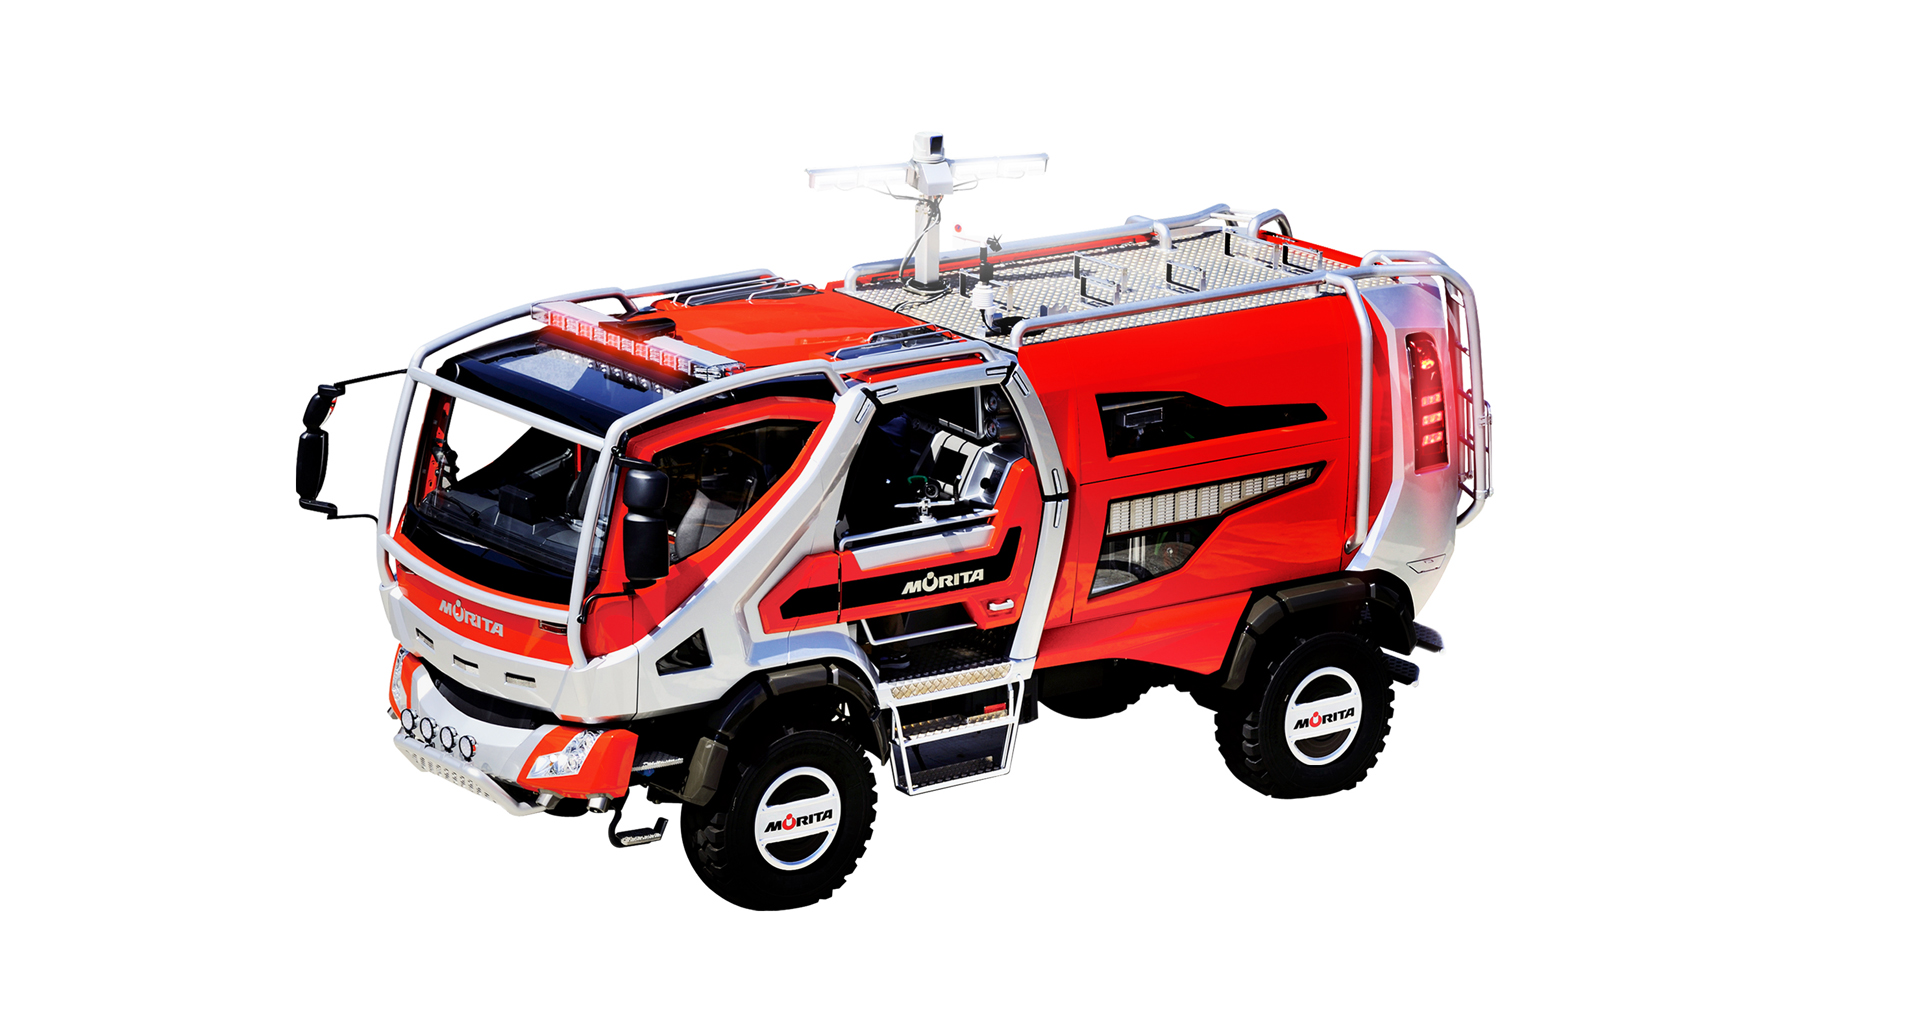 Wildfire truck